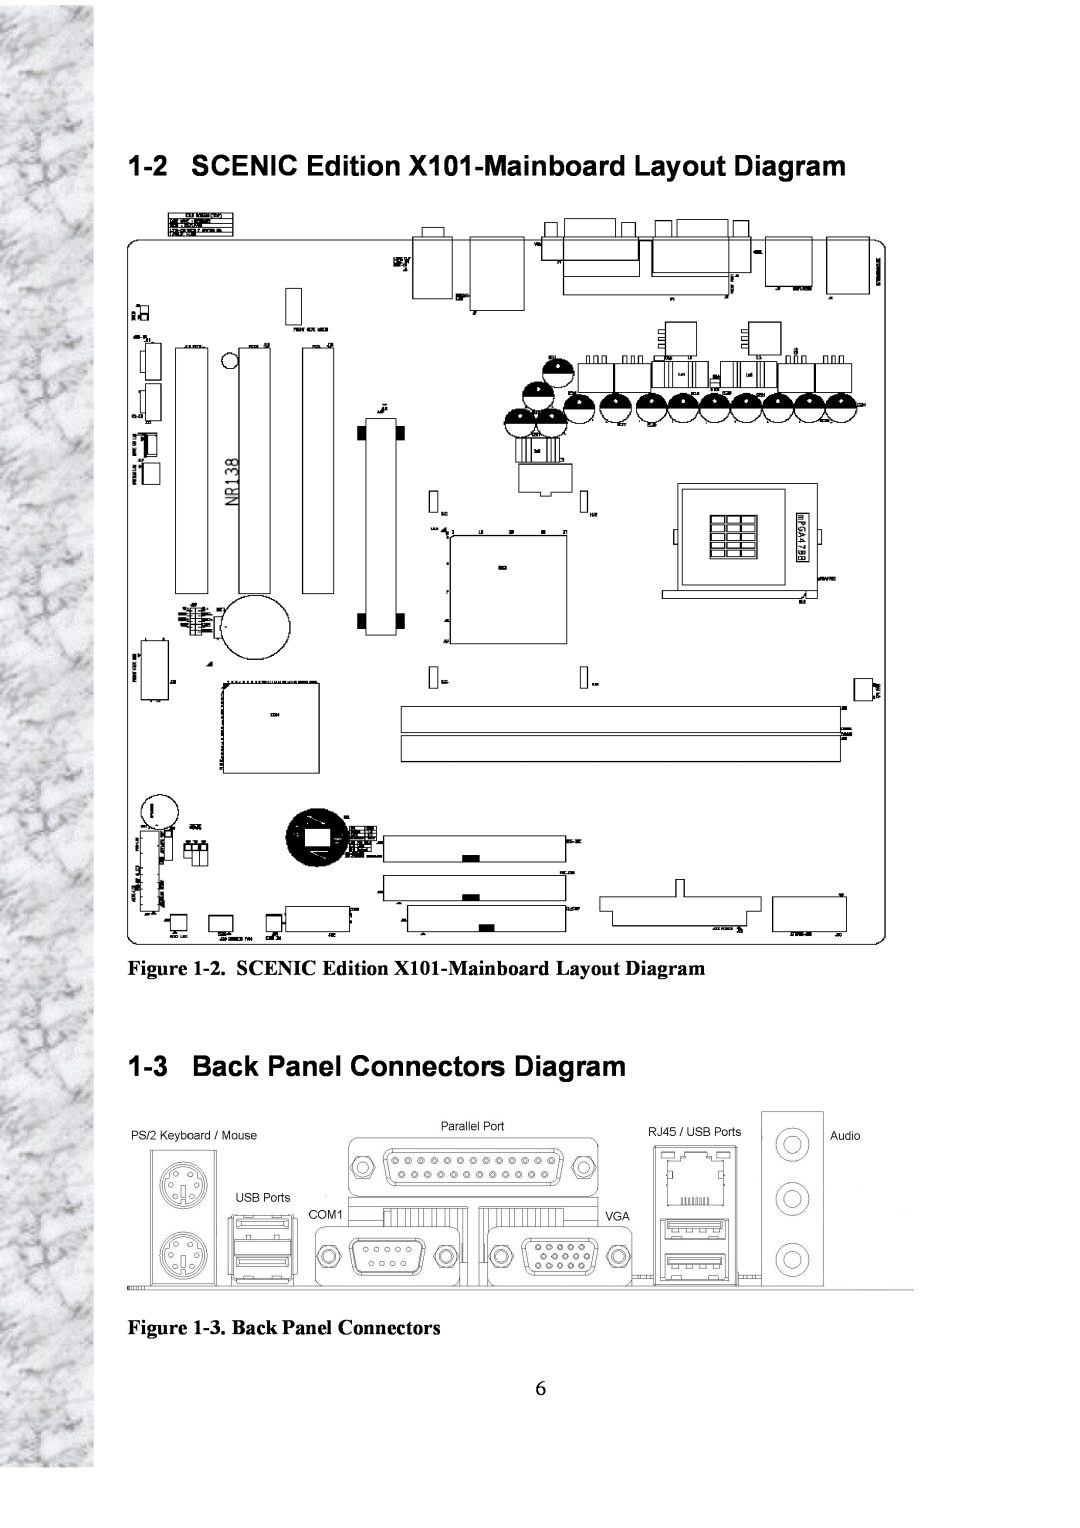 Intel user manual SCENIC Edition X101-Mainboard Layout Diagram, Back Panel Connectors Diagram, 3. Back Panel Connectors 